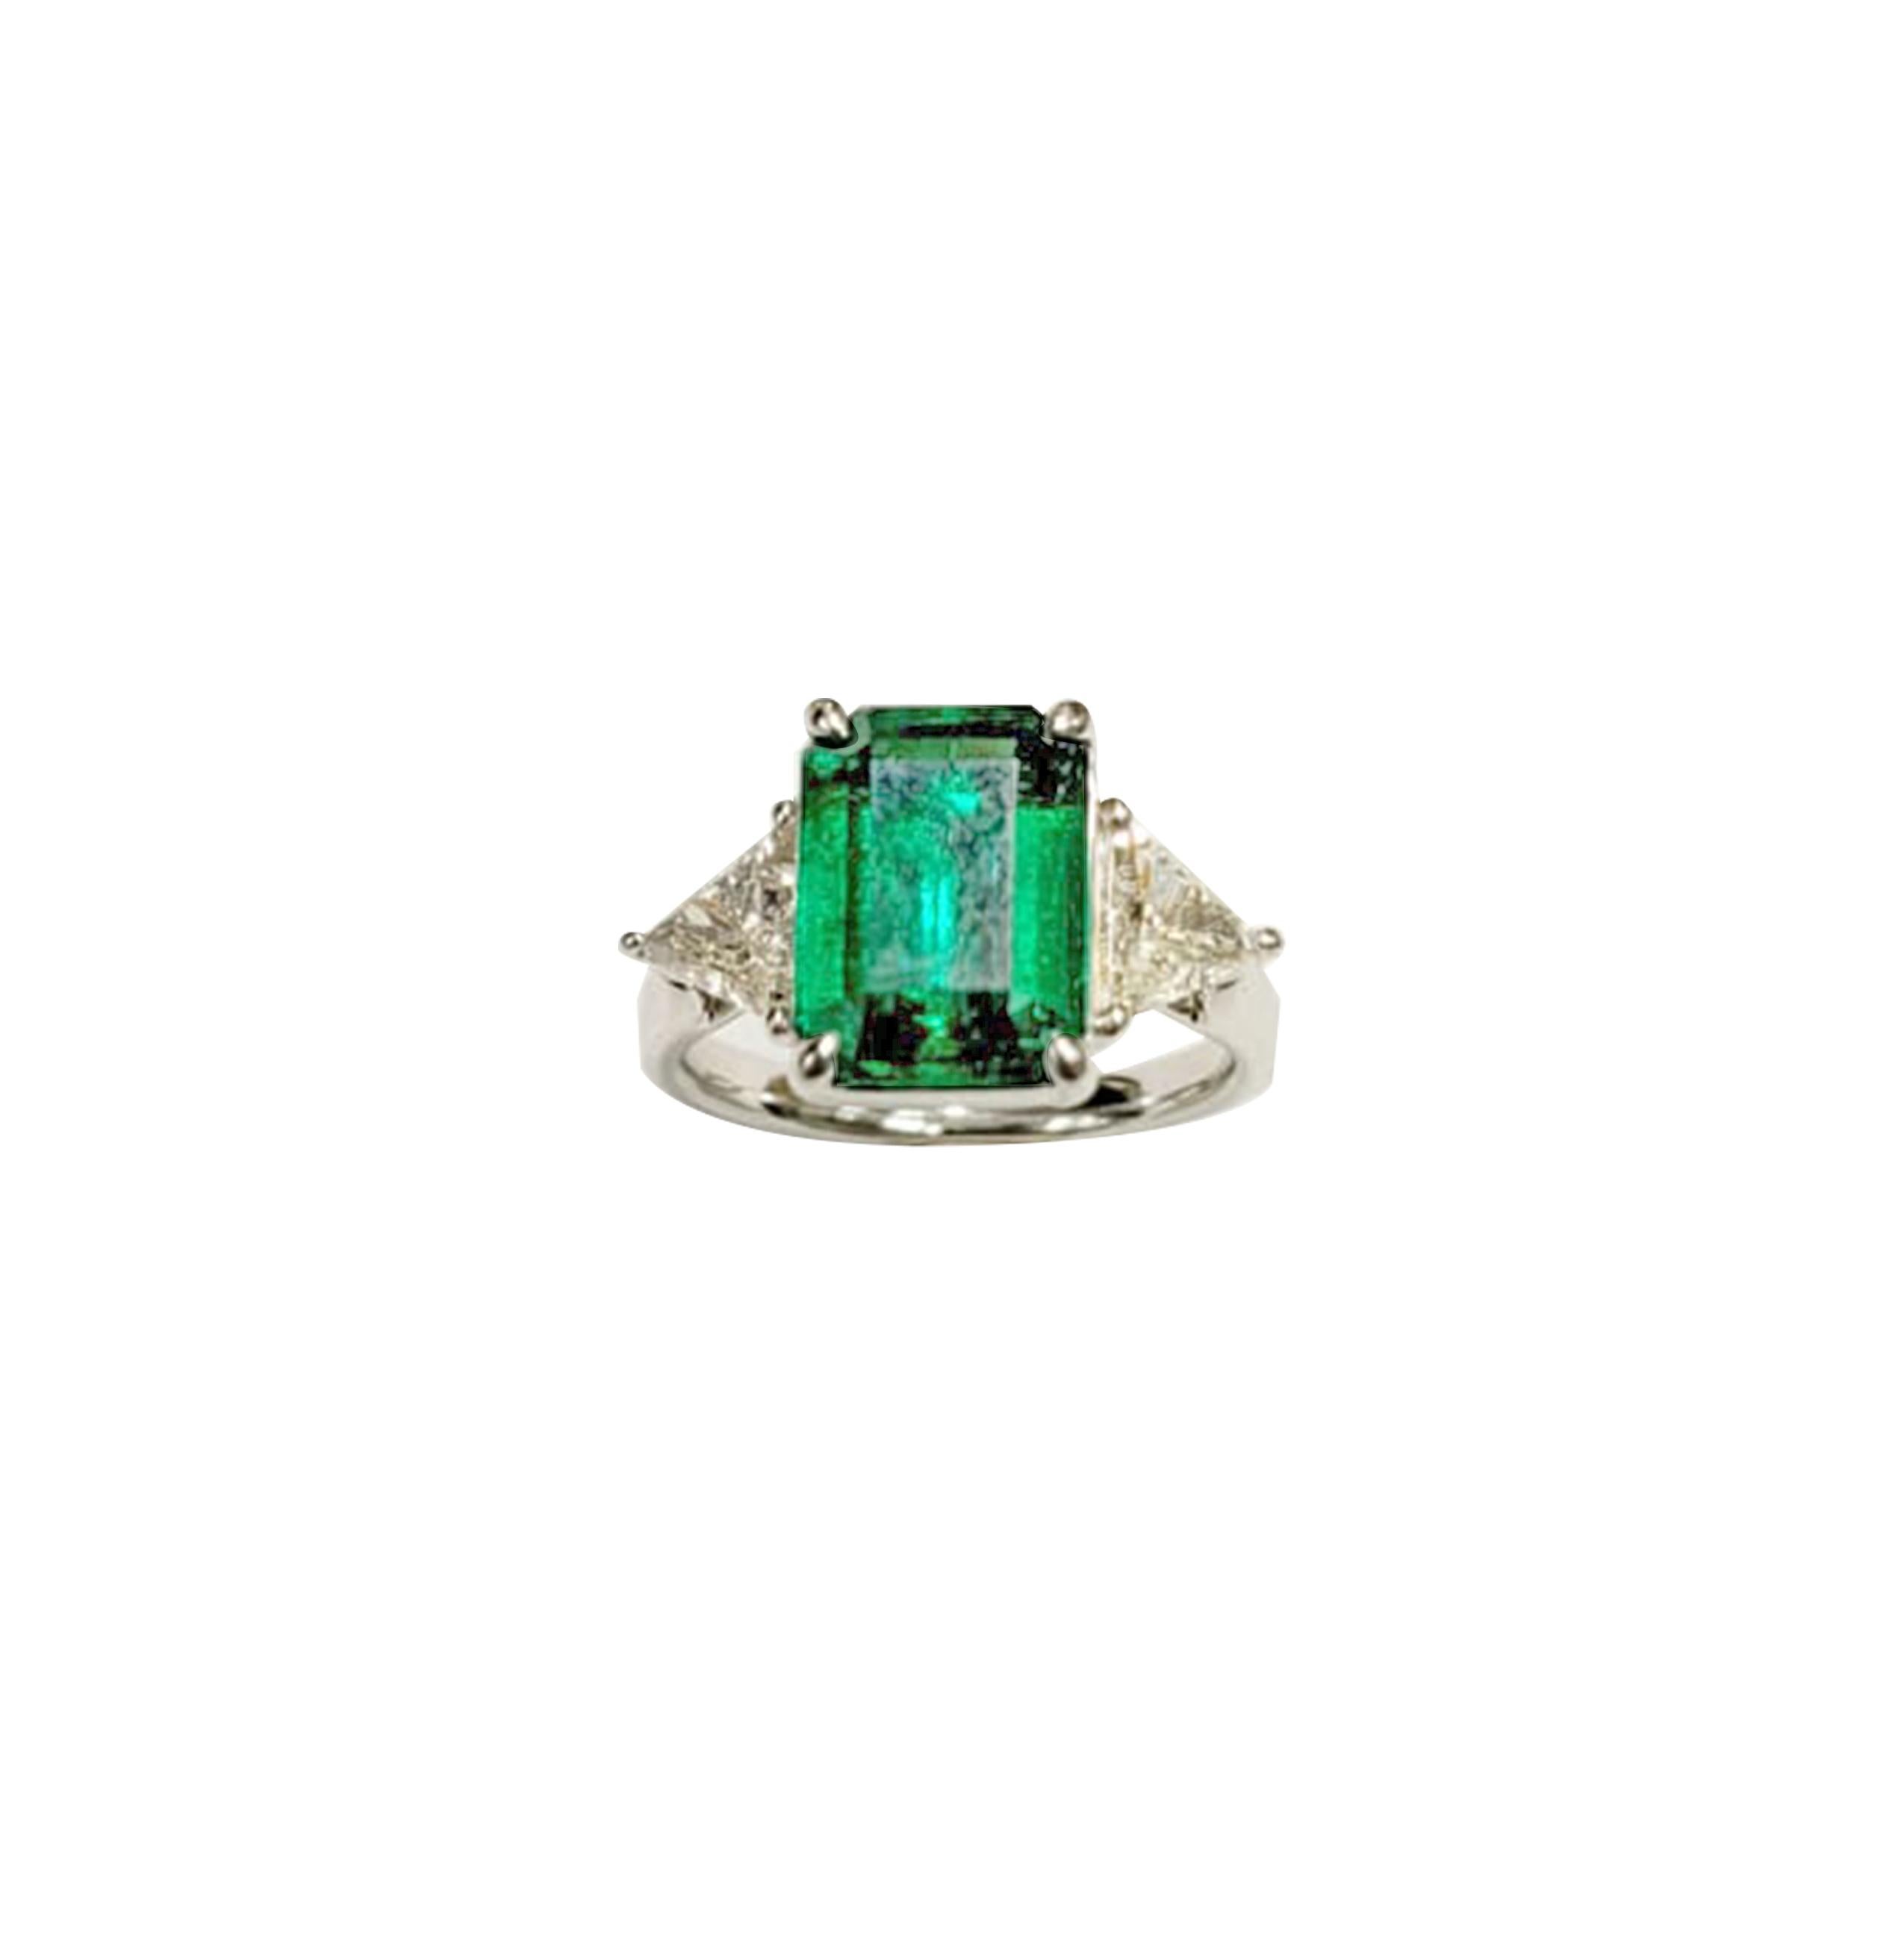 Emerald Cut African Emerald (4.20 carats, 11.5 x 8.3mm)

Trillion Cut Diamonds (1.00 carat) 

Ring Metal (Platinum)

Style/Tag# : CR2540E / 17800